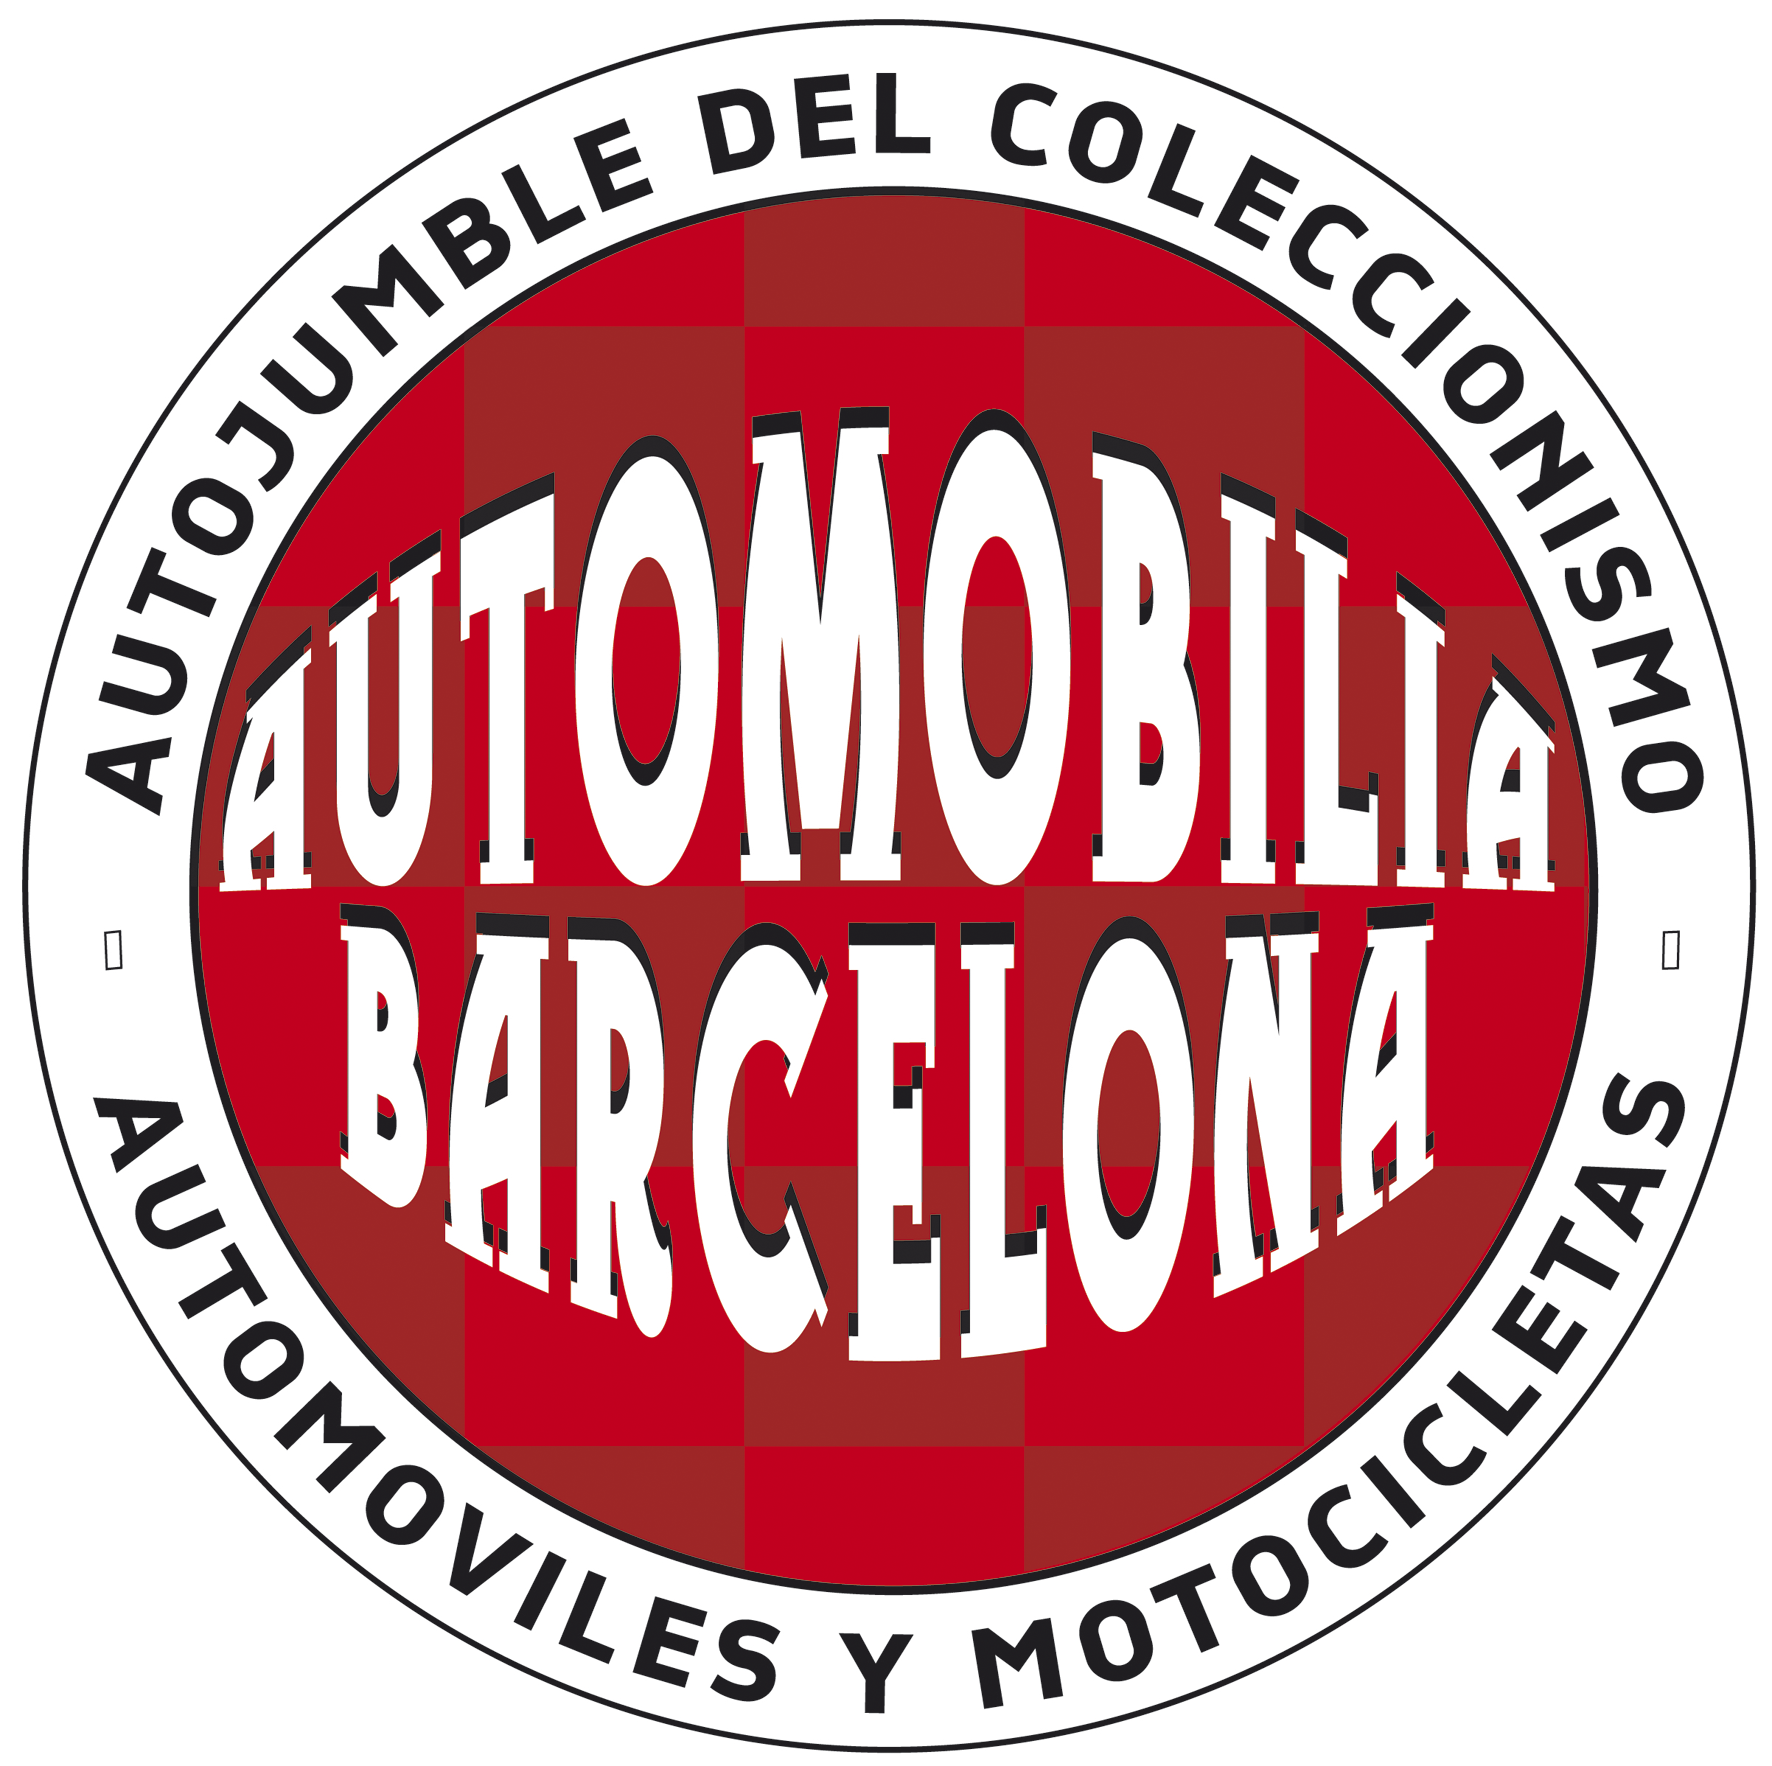 Automobilia Barcelona 2014